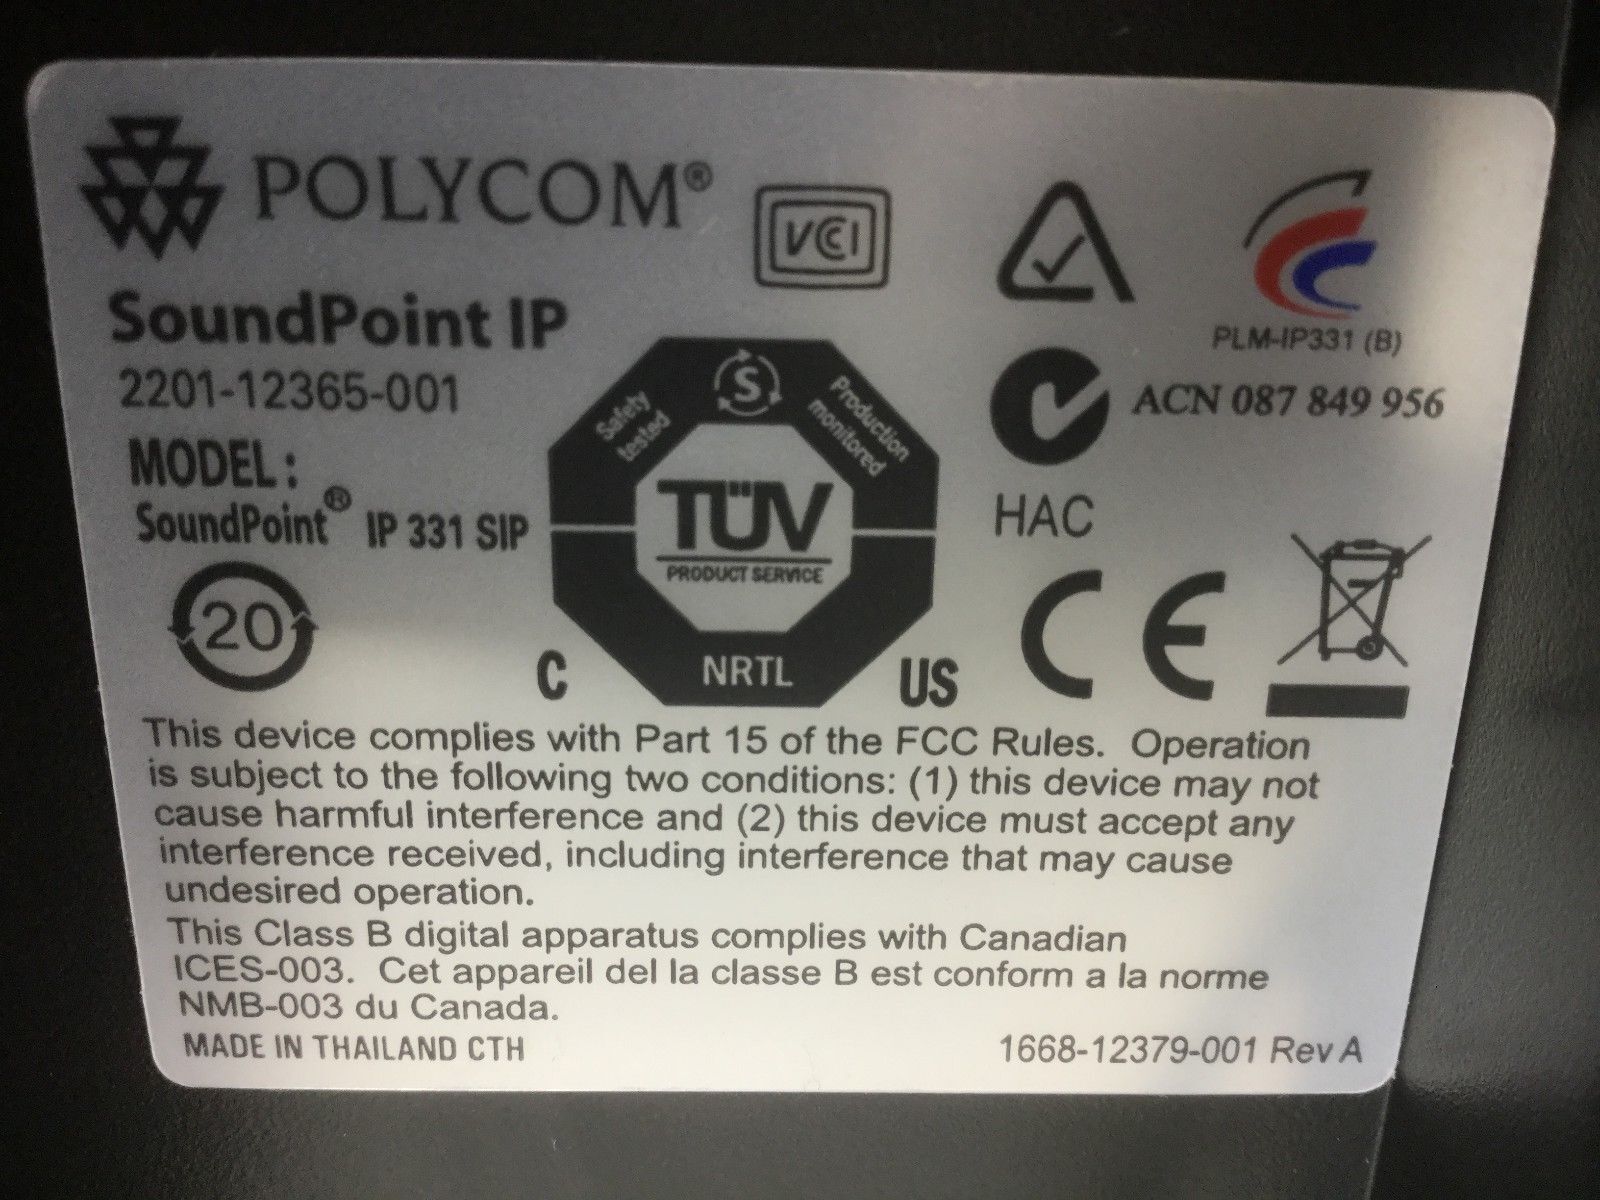 Polycom SoundPoint IP 331 SIP Business Phone 2201-12365-001